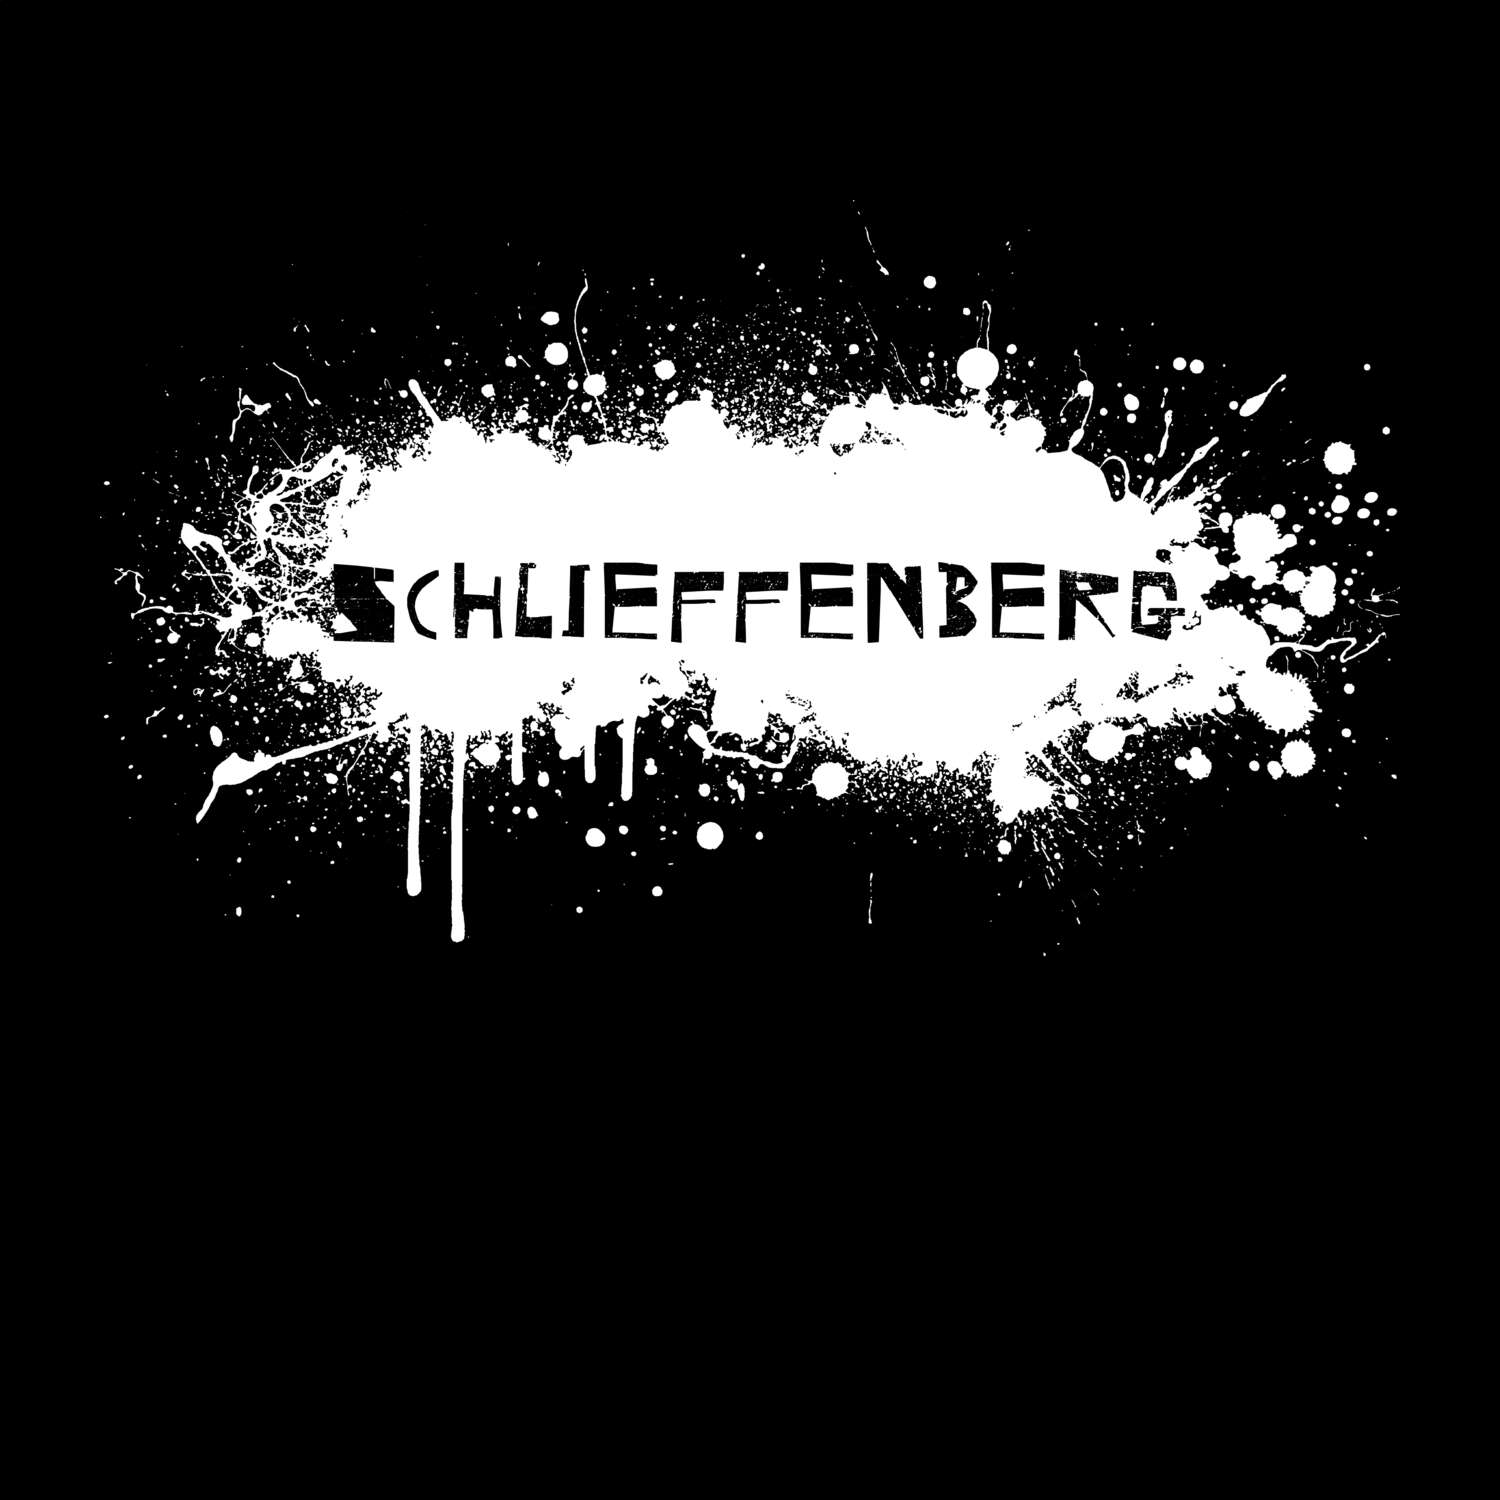 Schlieffenberg T-Shirt »Paint Splash Punk«